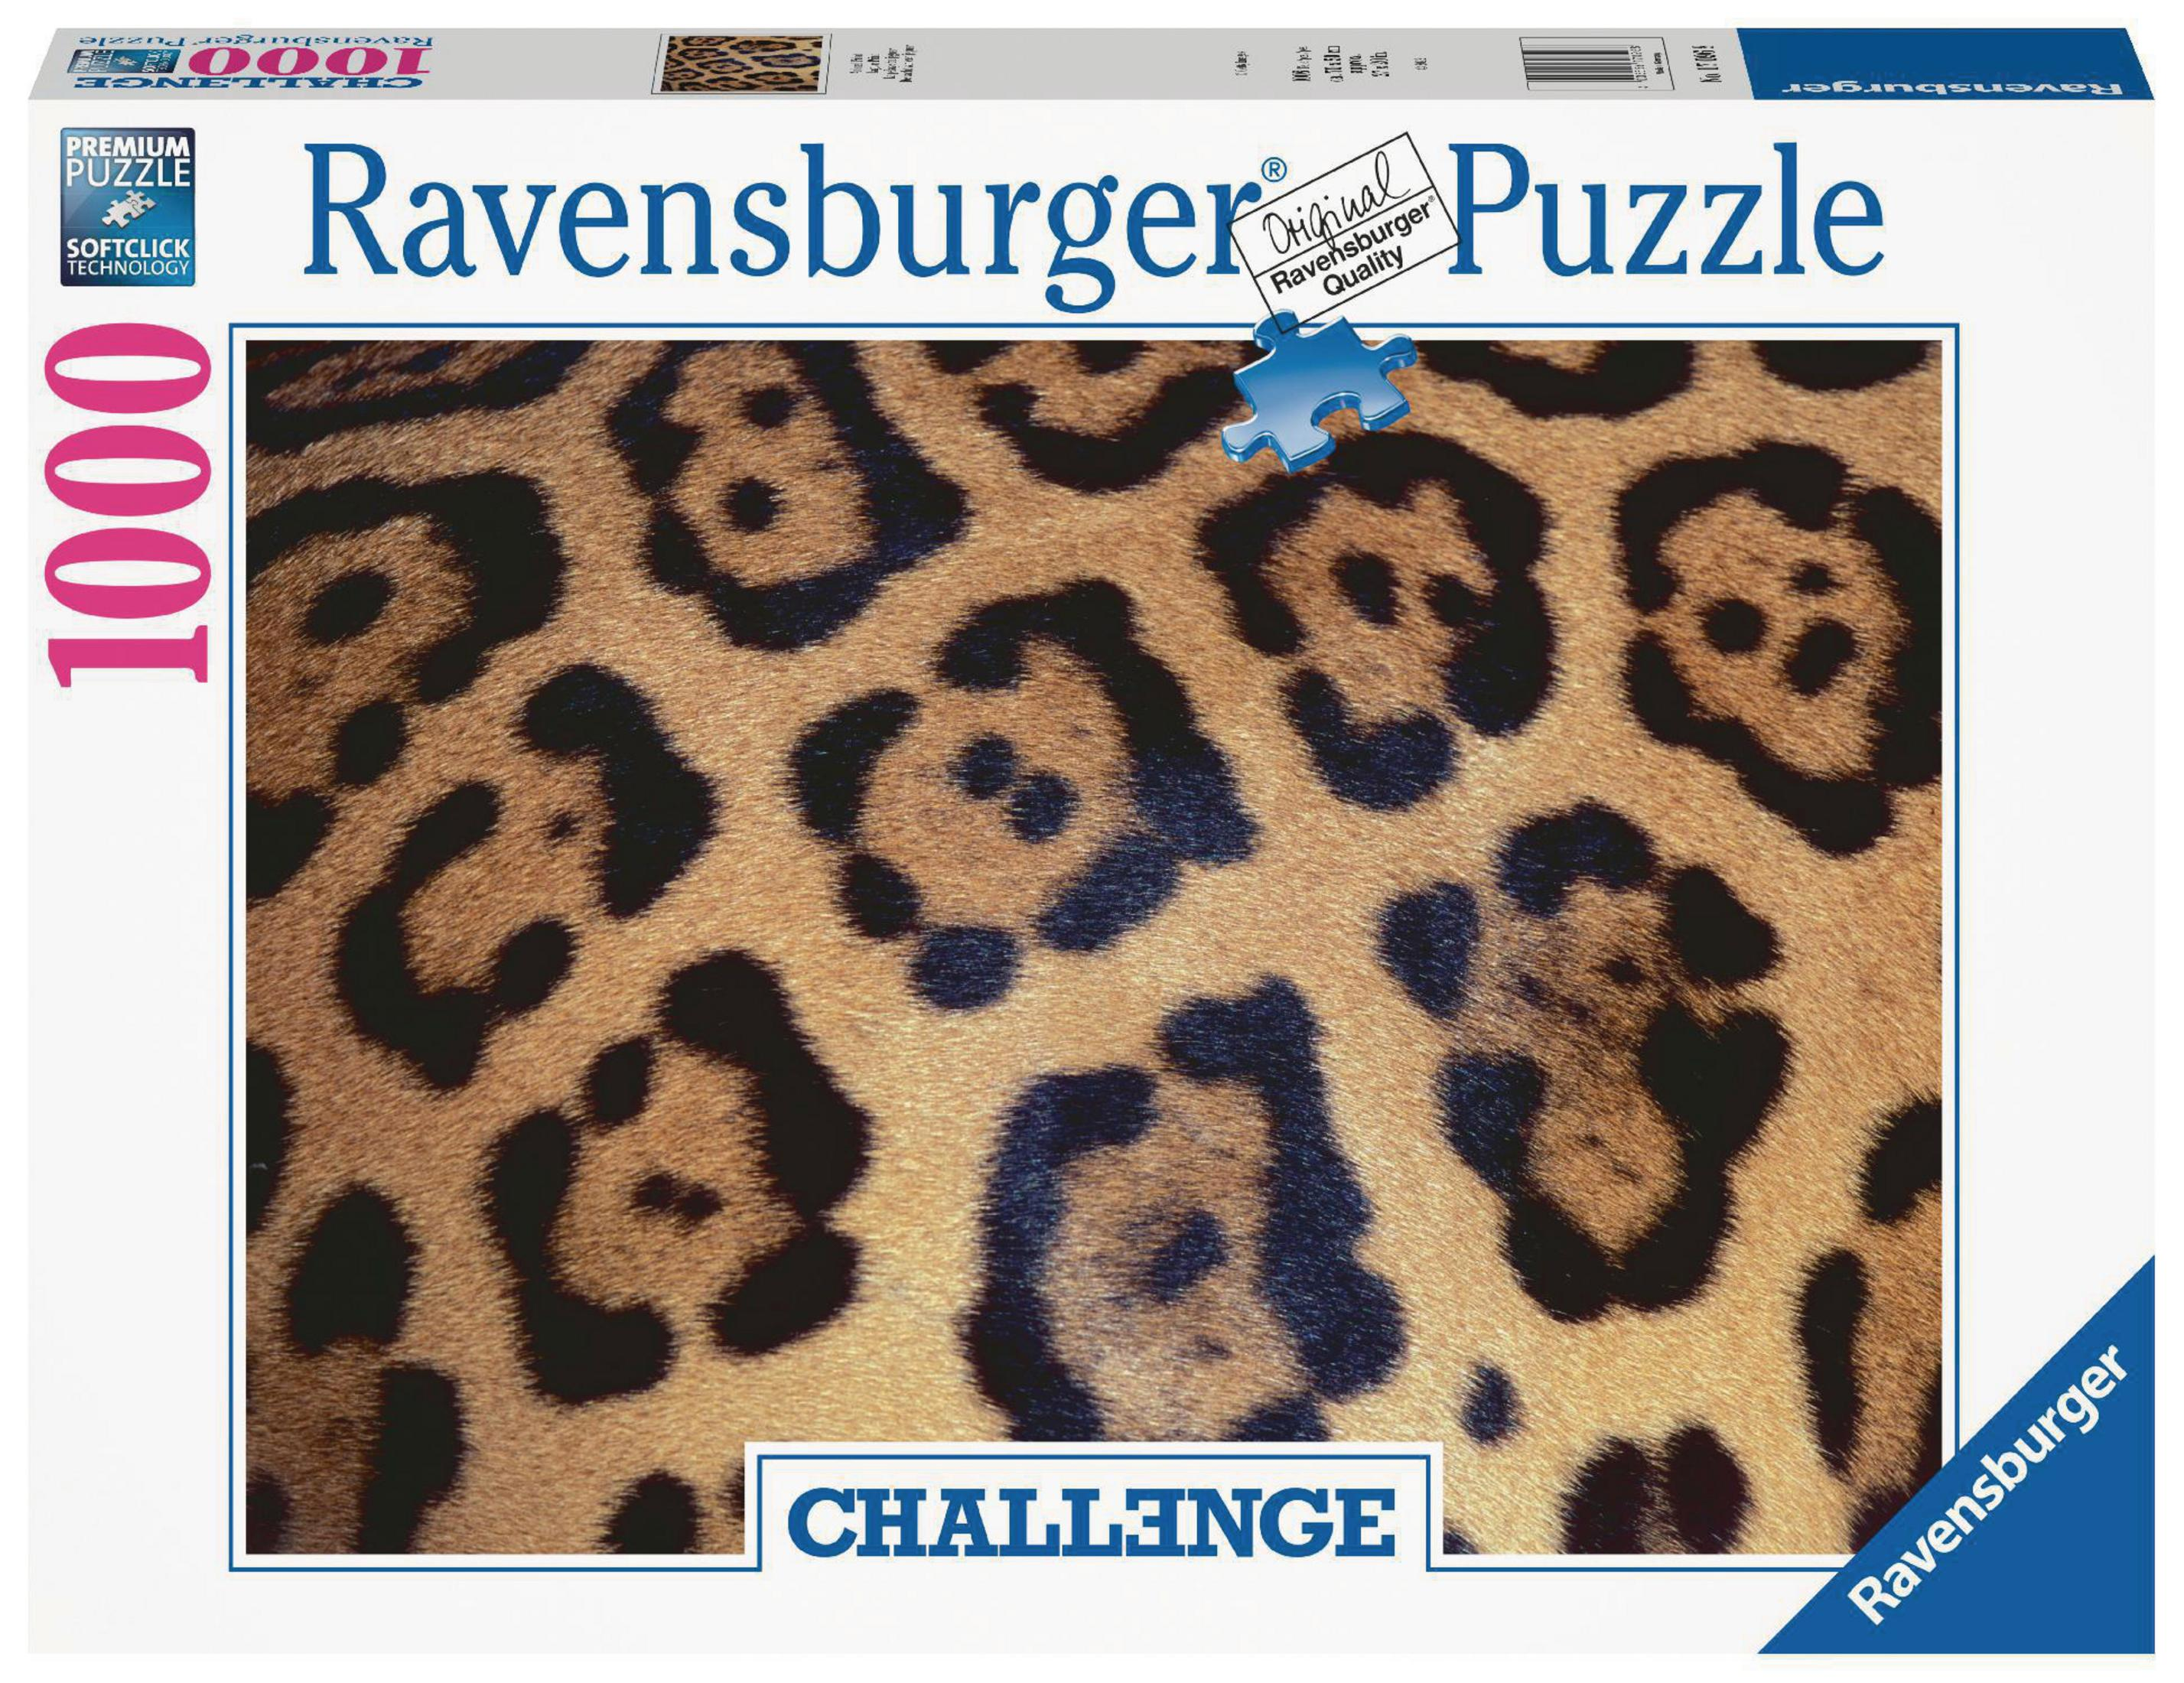 RAVENSBURGER 17096 CHALLENGE Puzzle 1000P PRINT ANIMAL